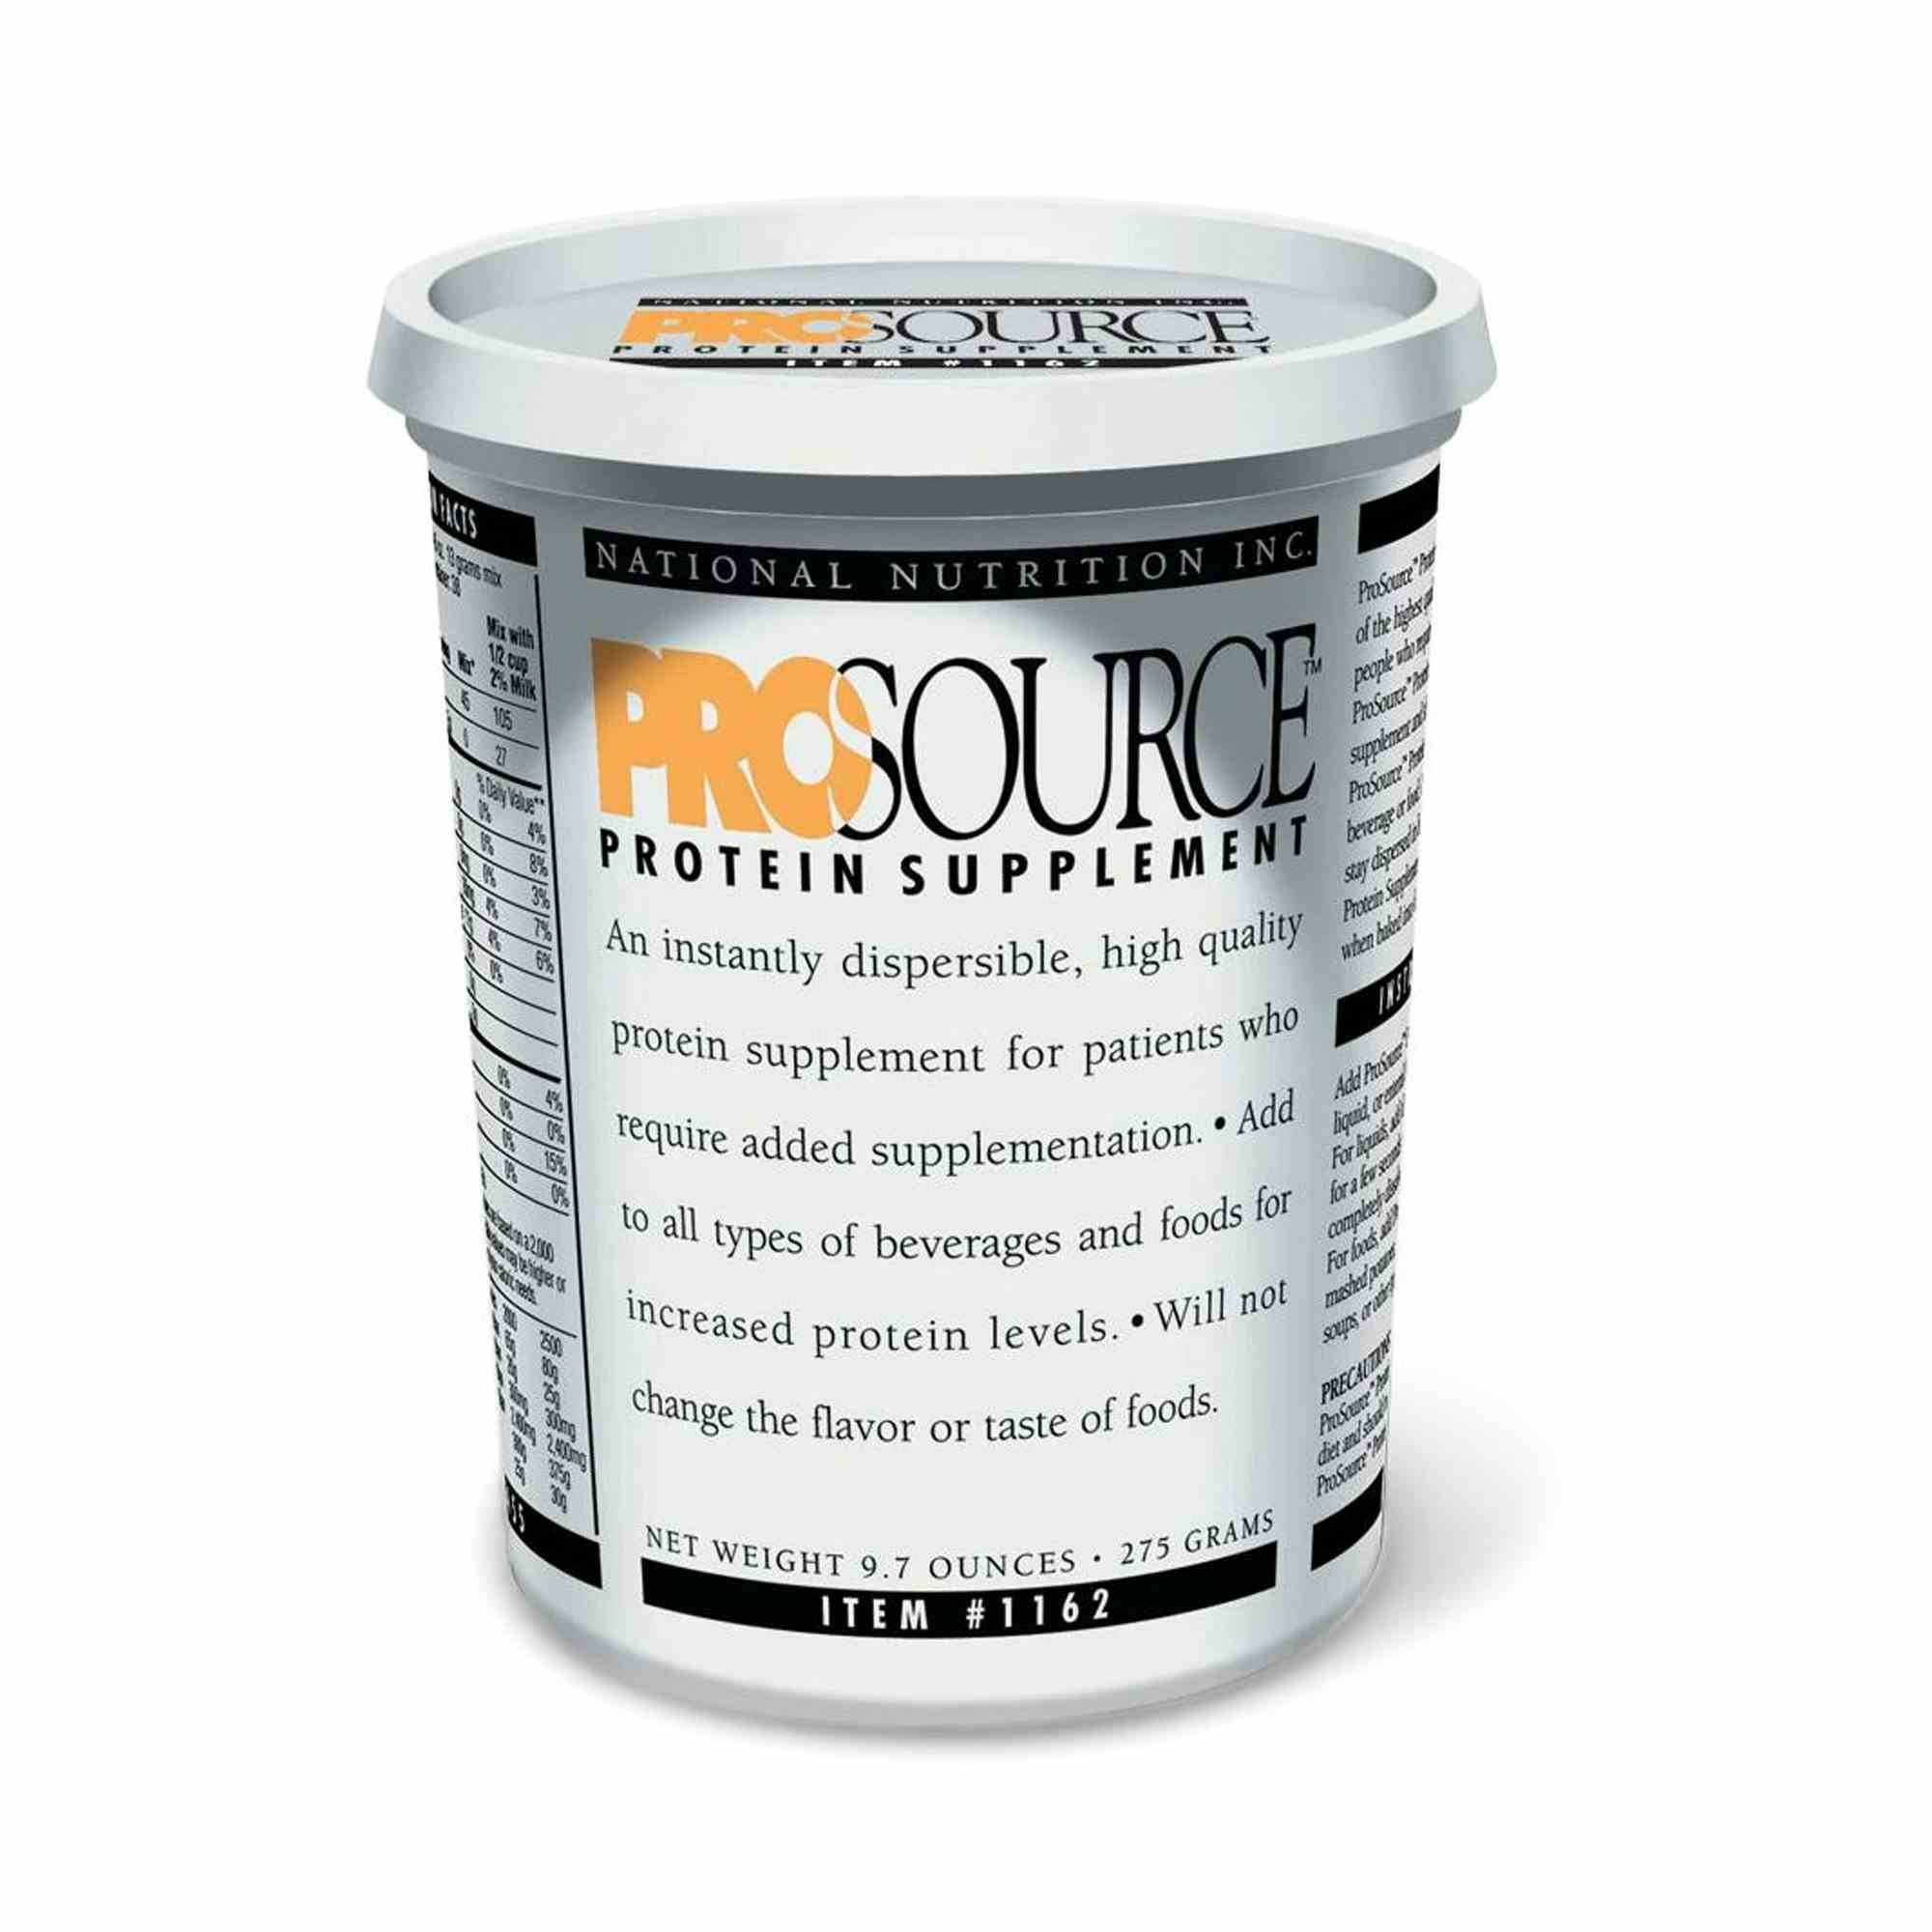 ProSource Protein Supplement, Unflavored, 9.7 oz., 11162, 1 Each